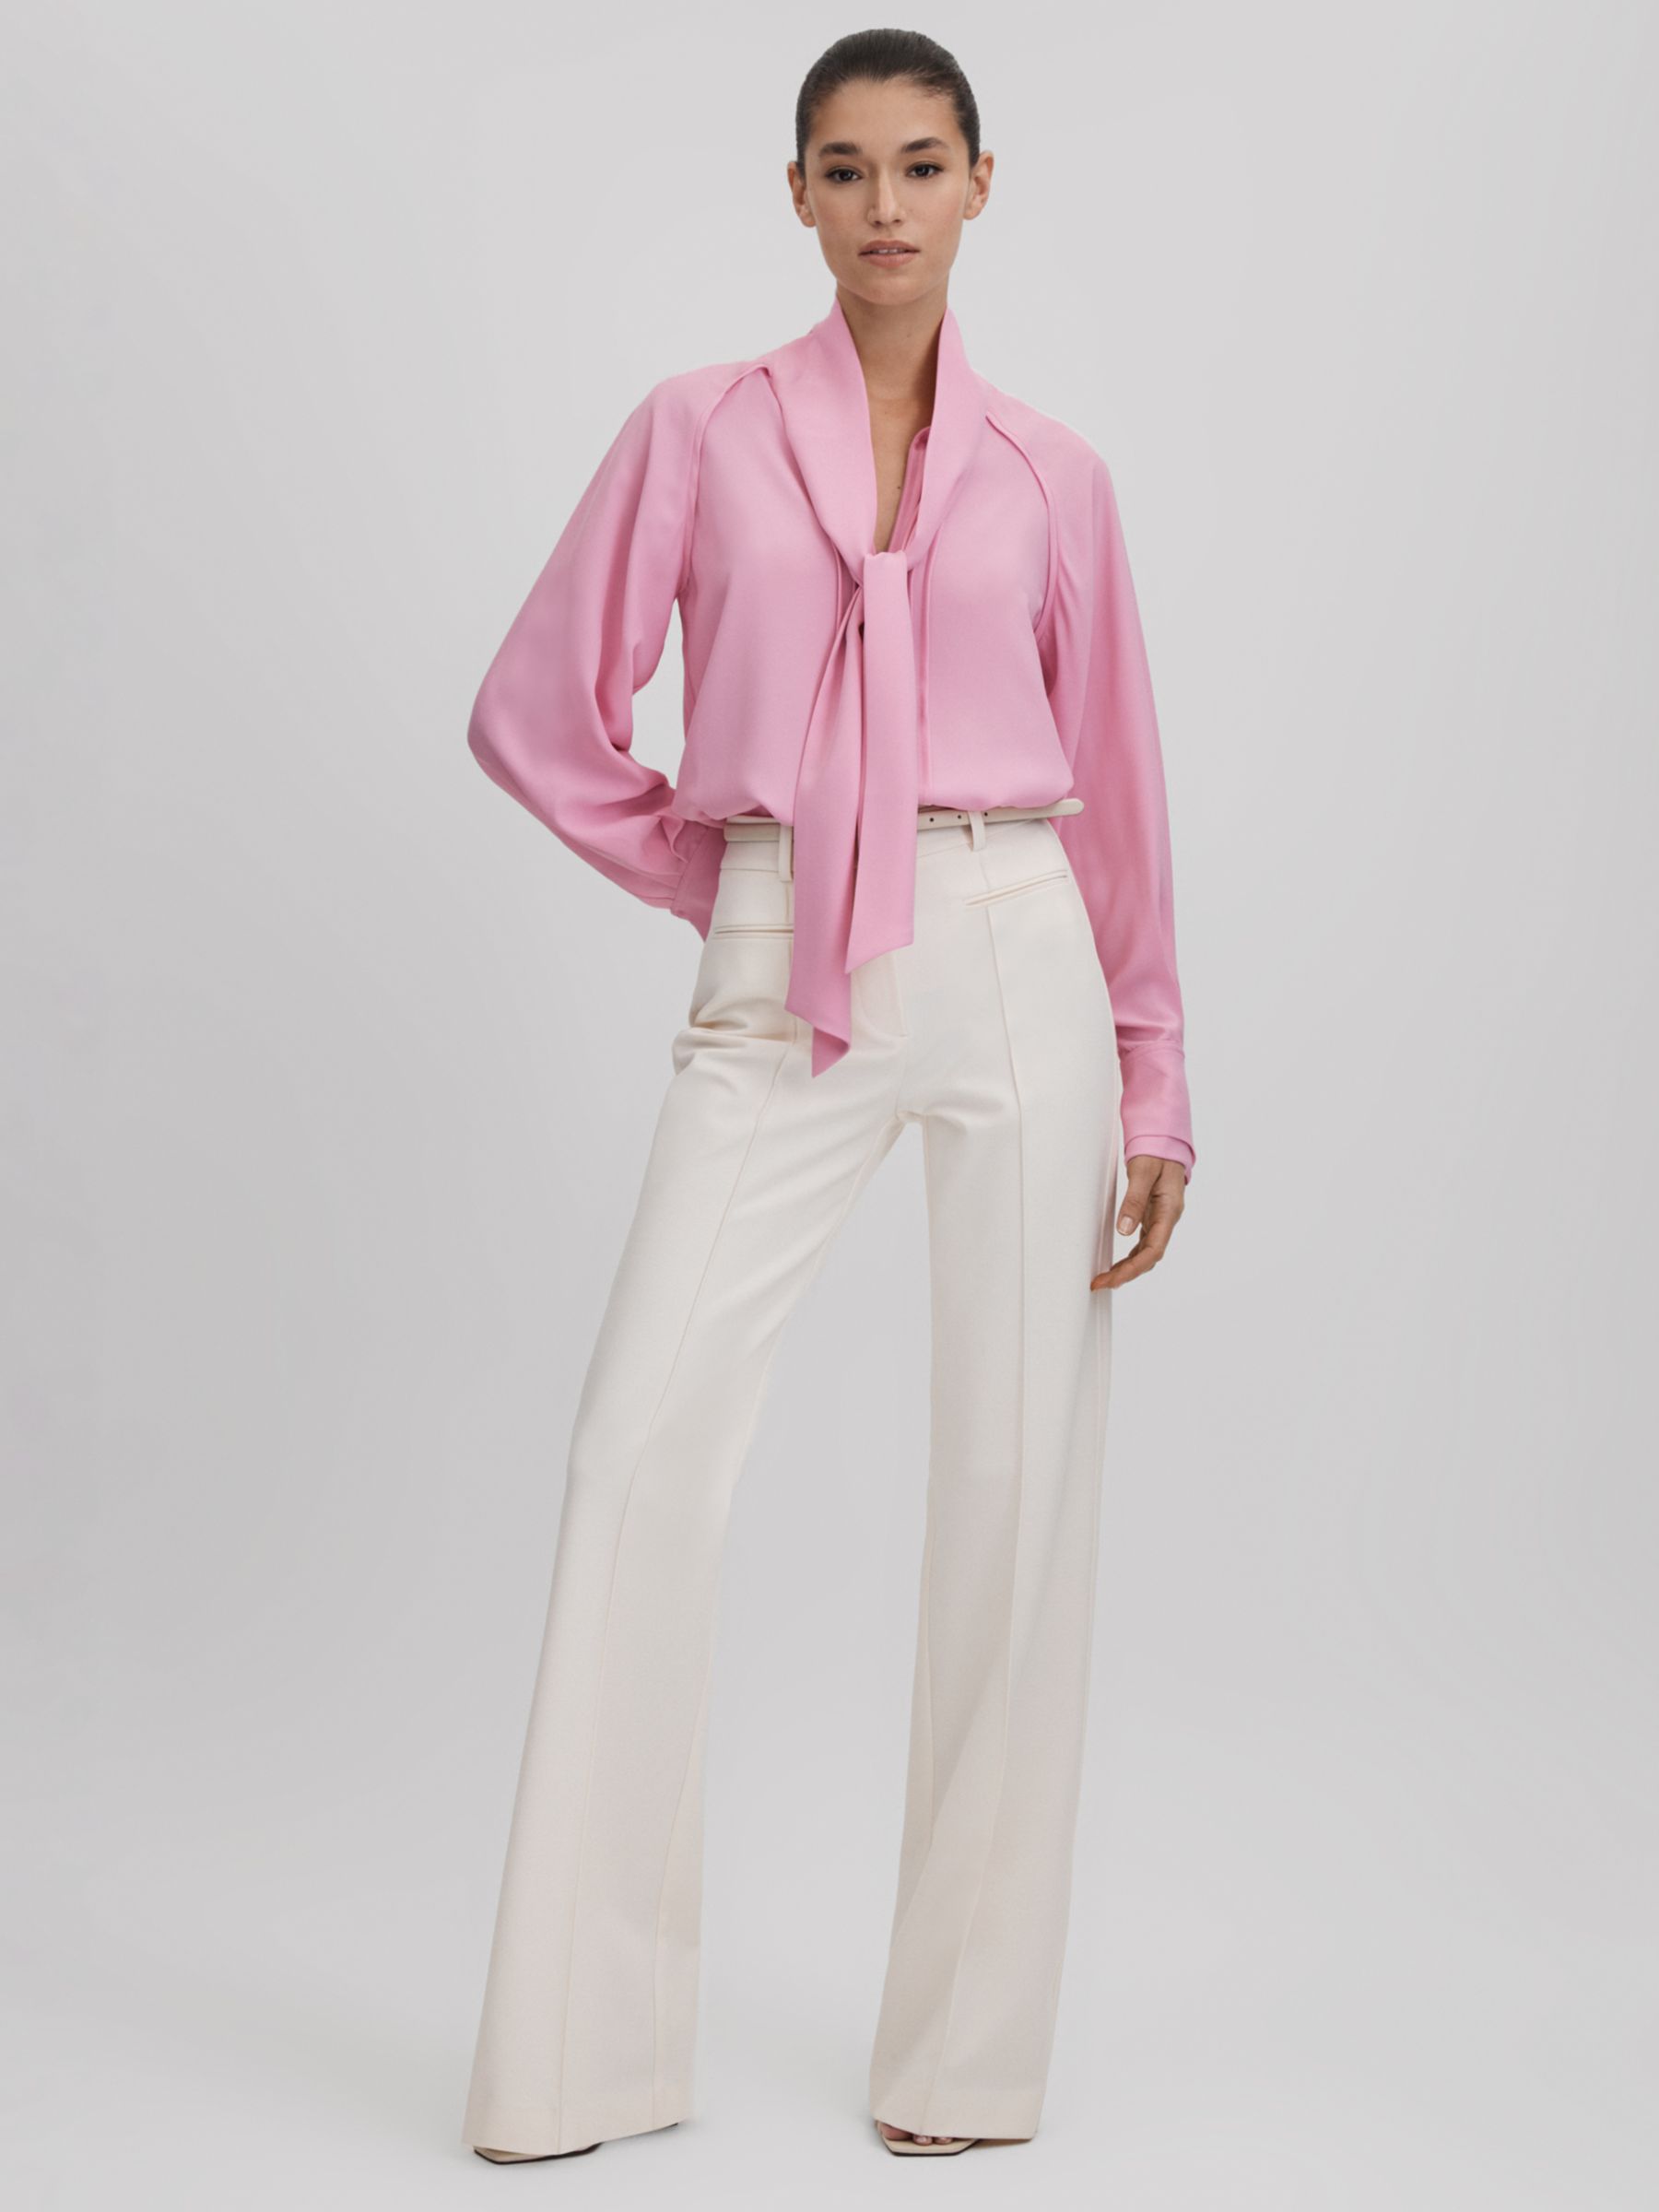 Reiss Ella Tie Detail Blouse, Pink at John Lewis & Partners